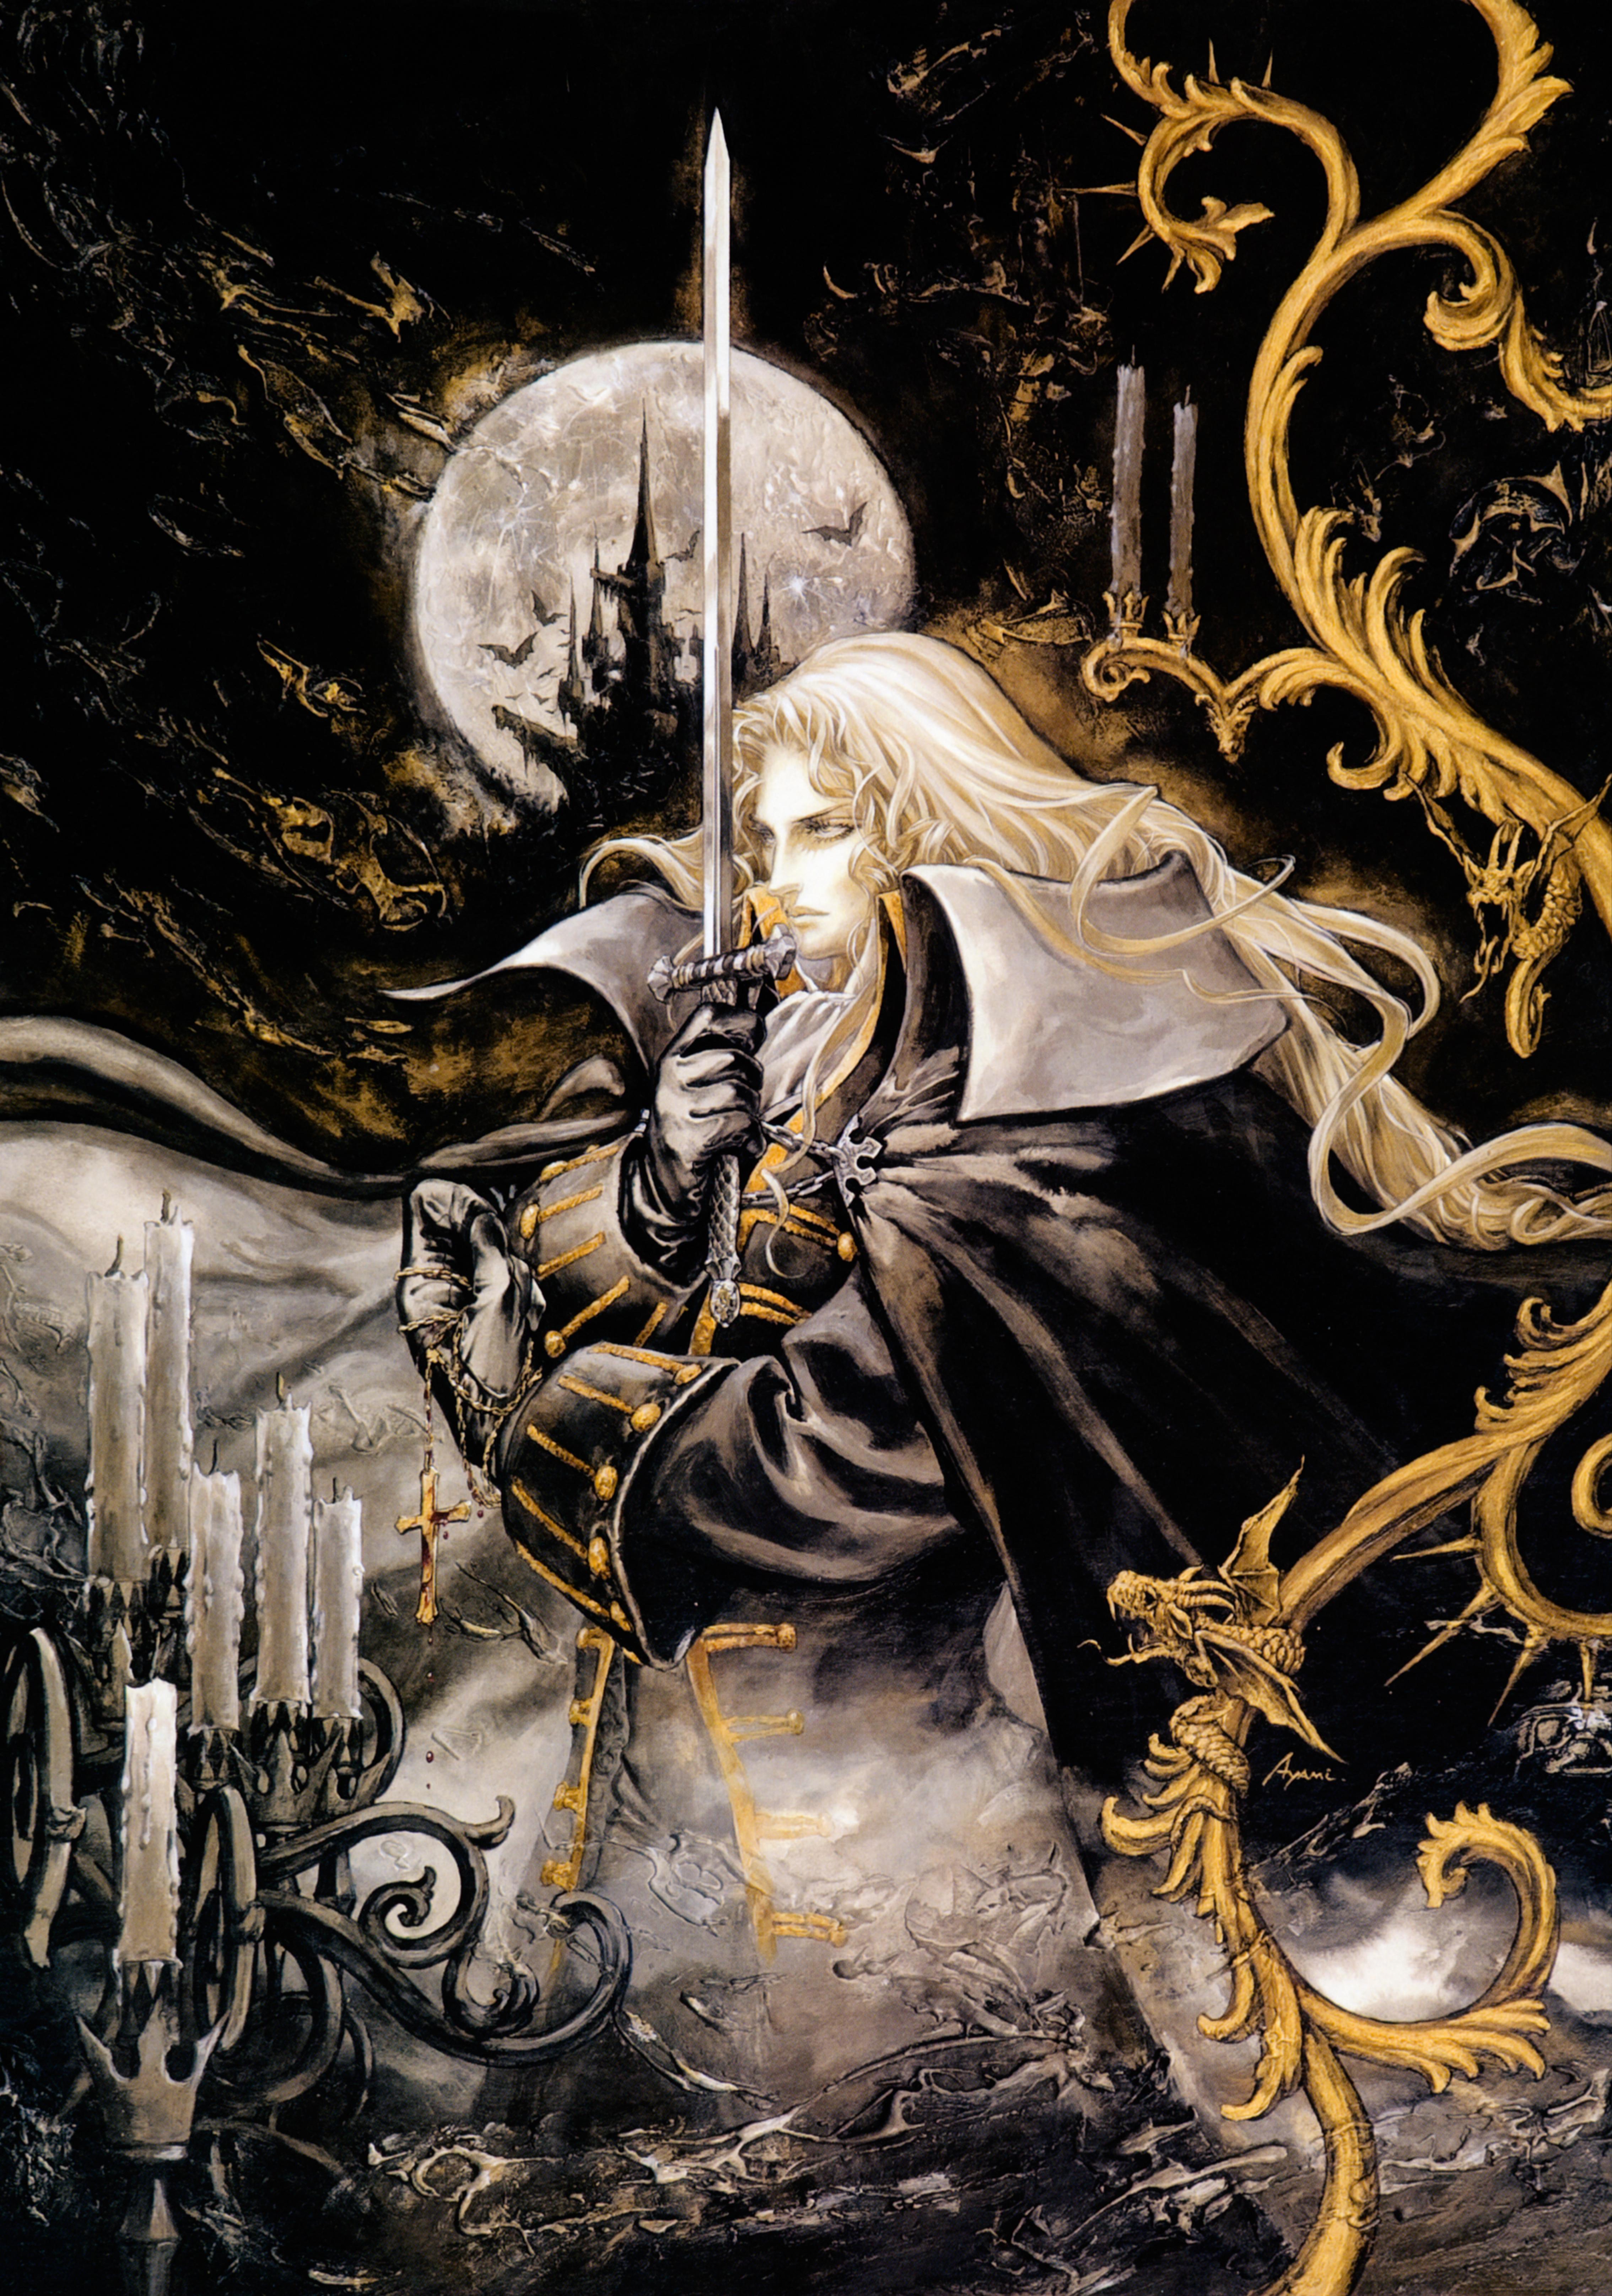 Castlevania: Symphony of the Night Anime Image Board